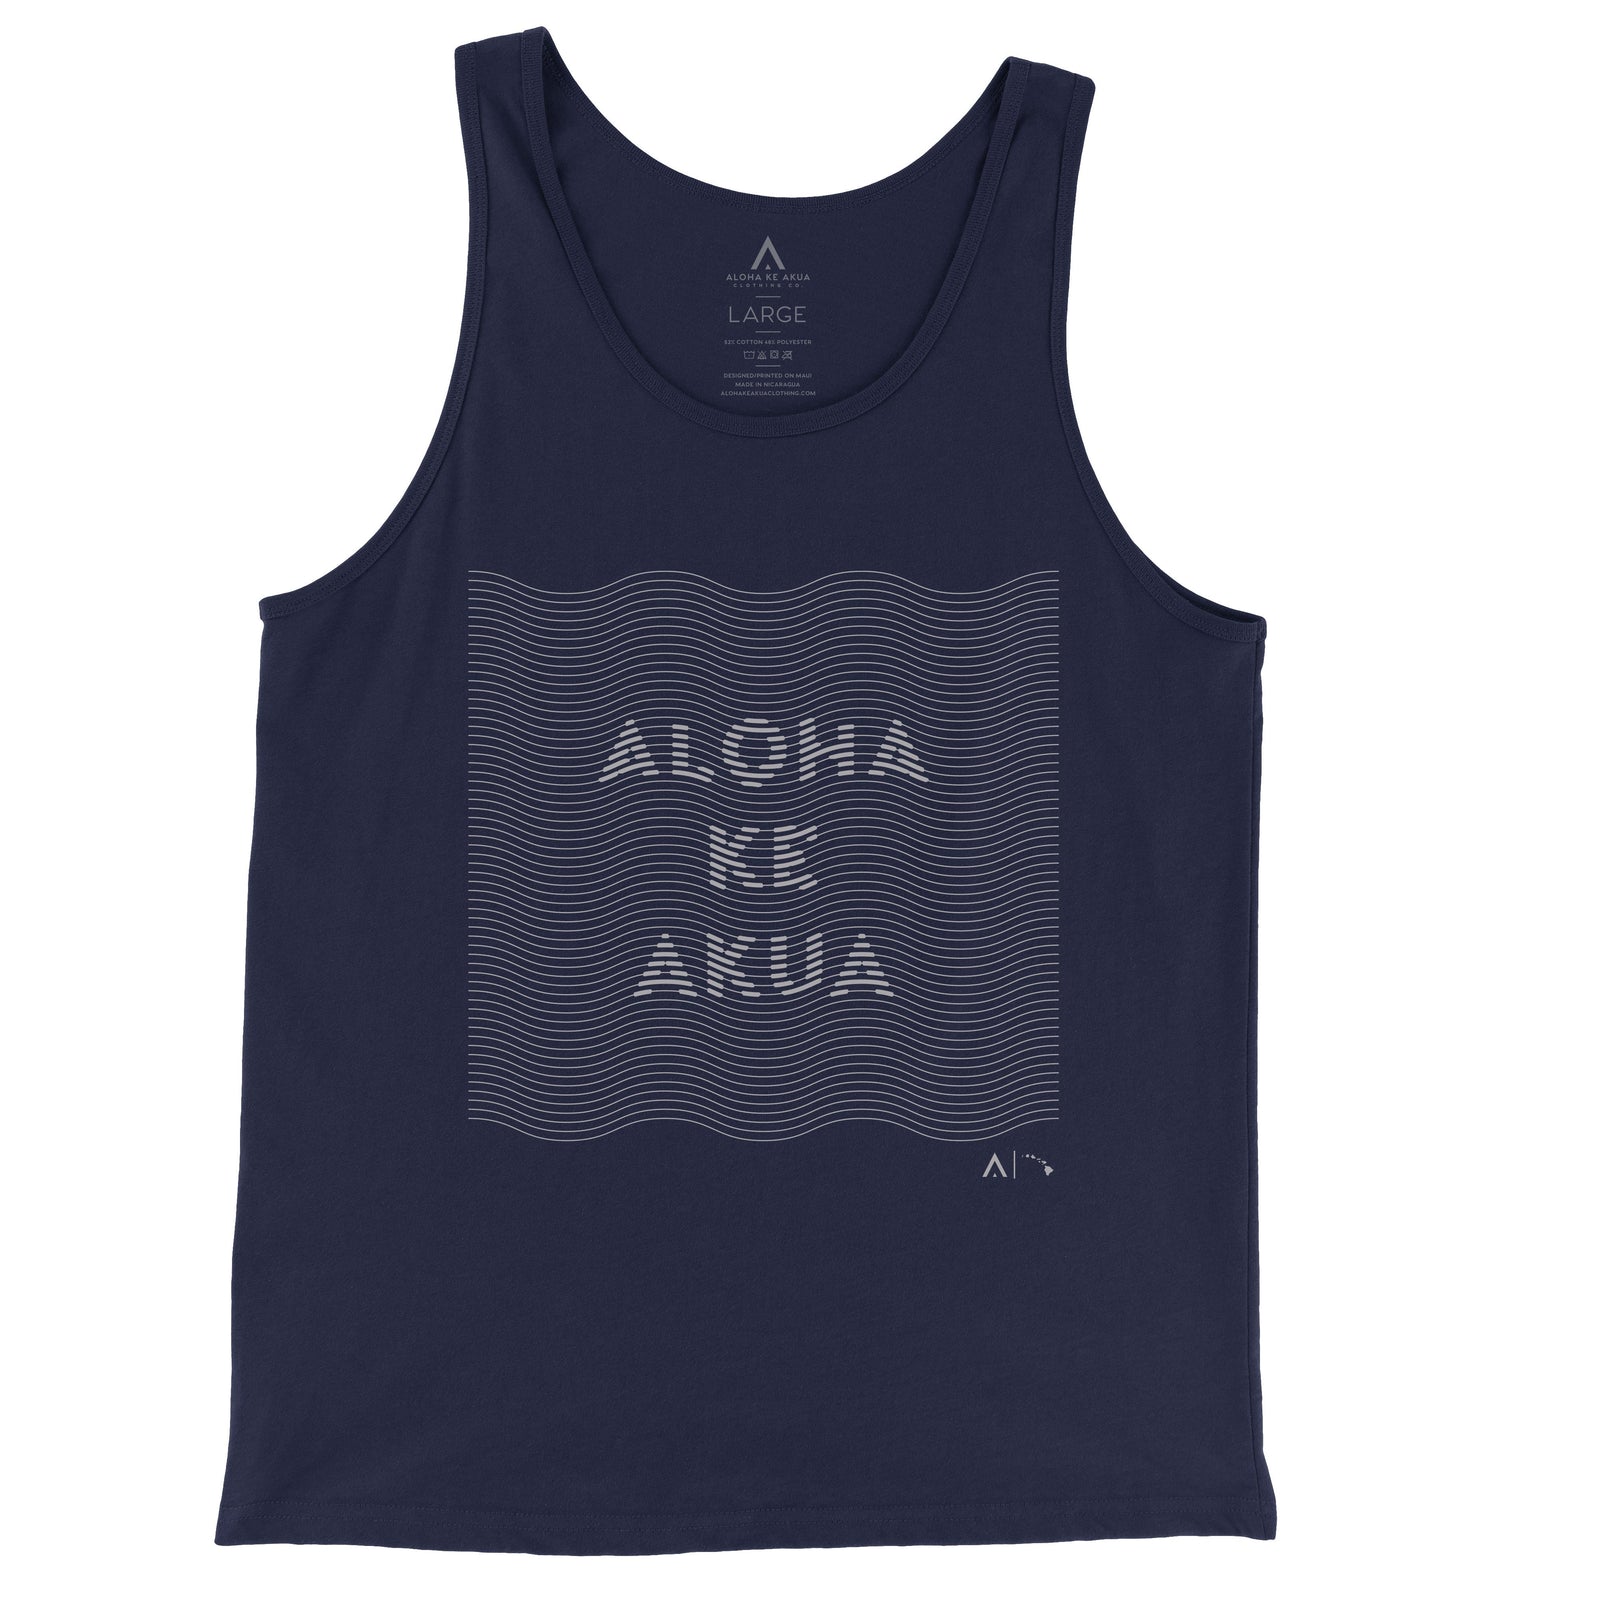 Pop-Up Mākeke - Aloha Ke Akua Clothing - Kainalu Men's Tank Top - Navy